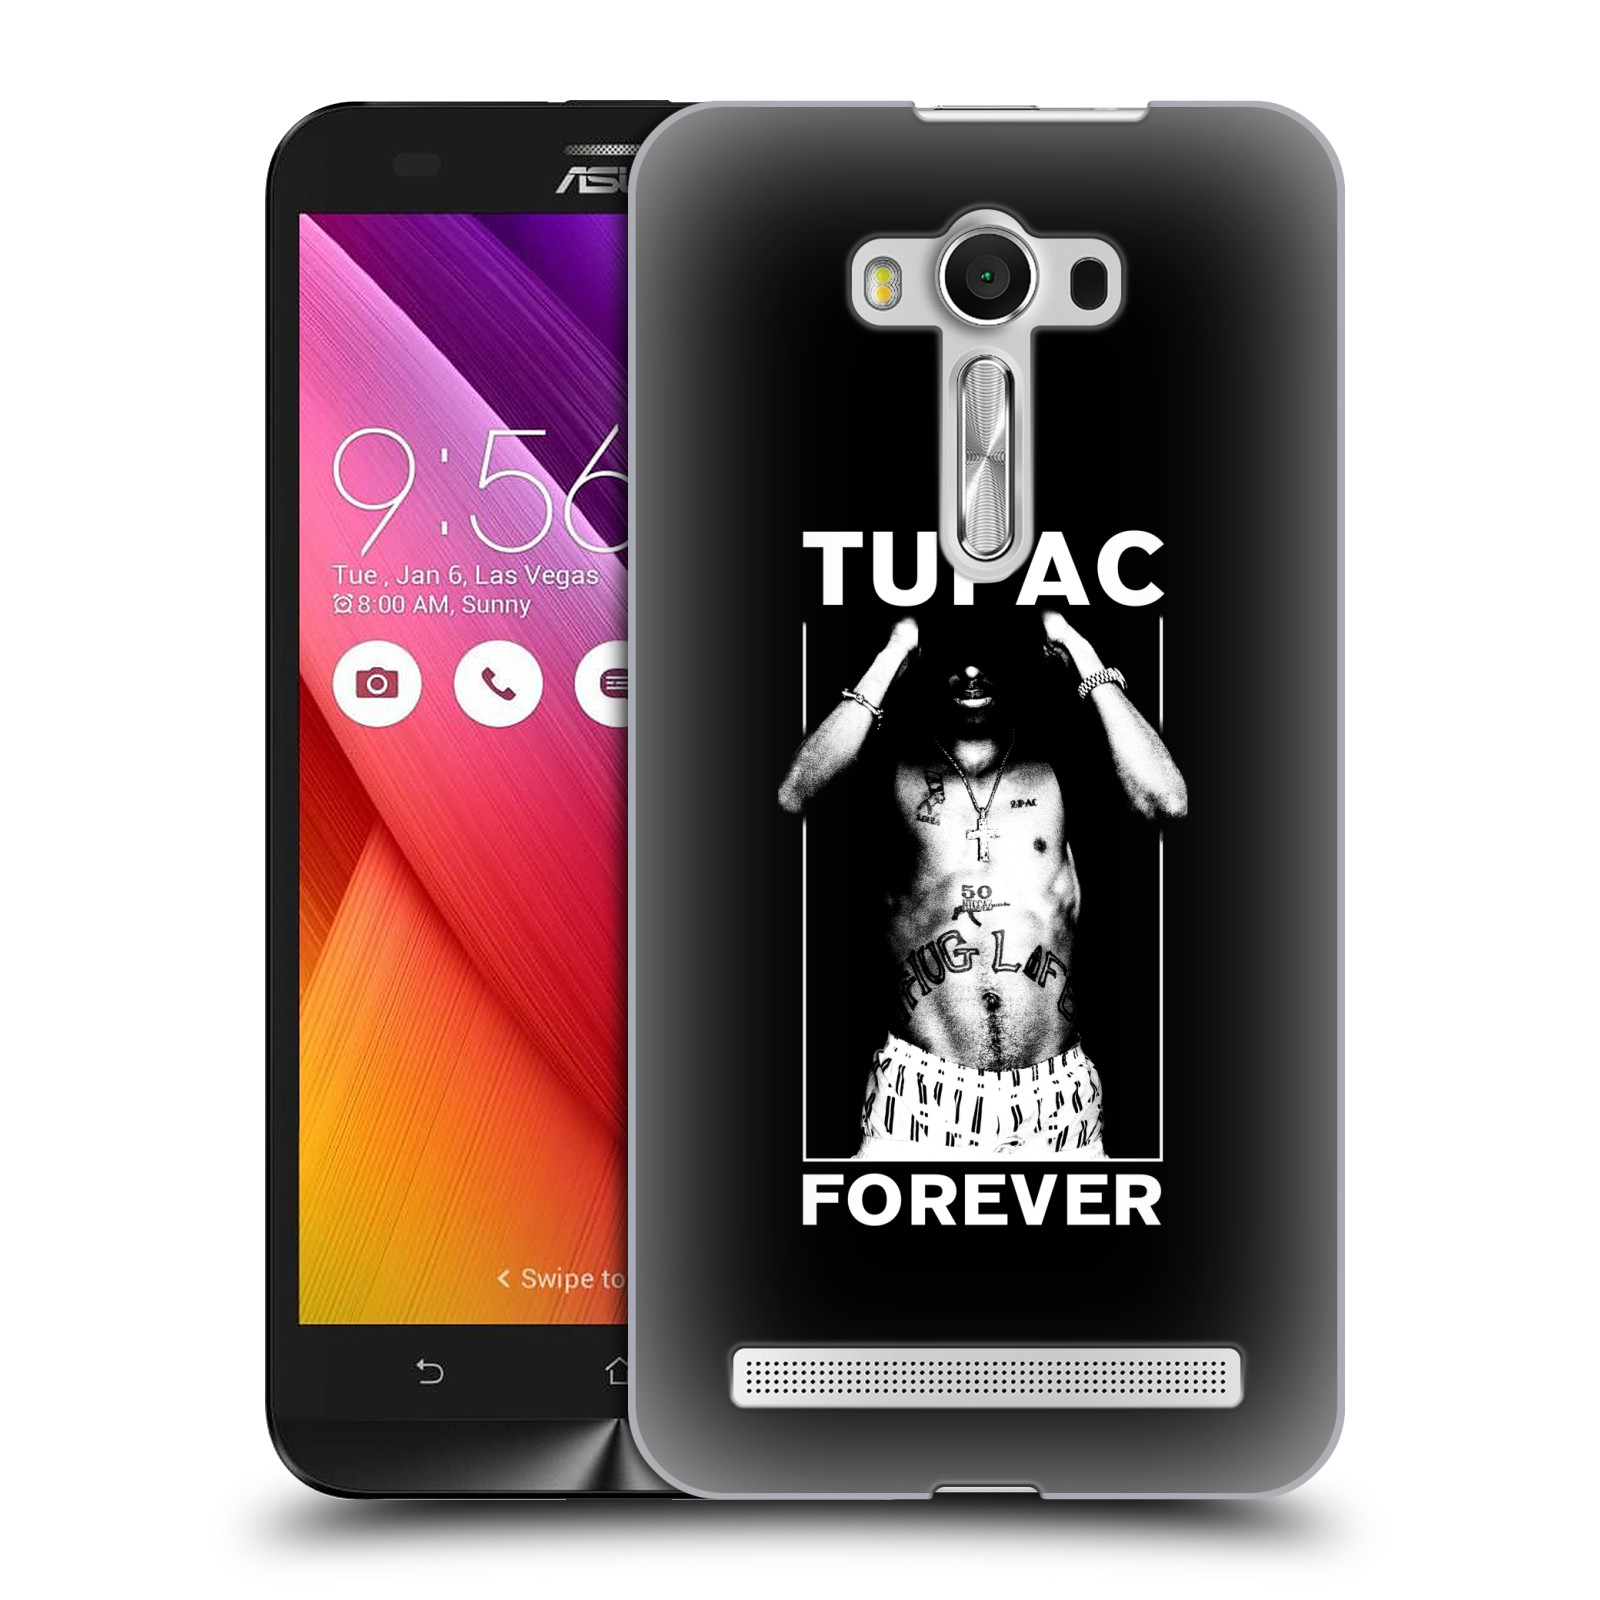 HEAD CASE plastový obal na mobil Asus Zenfone 2 LASER (5,5 displej ZE550KL) Zpěvák rapper Tupac Shakur 2Pac bílý popisek FOREVER